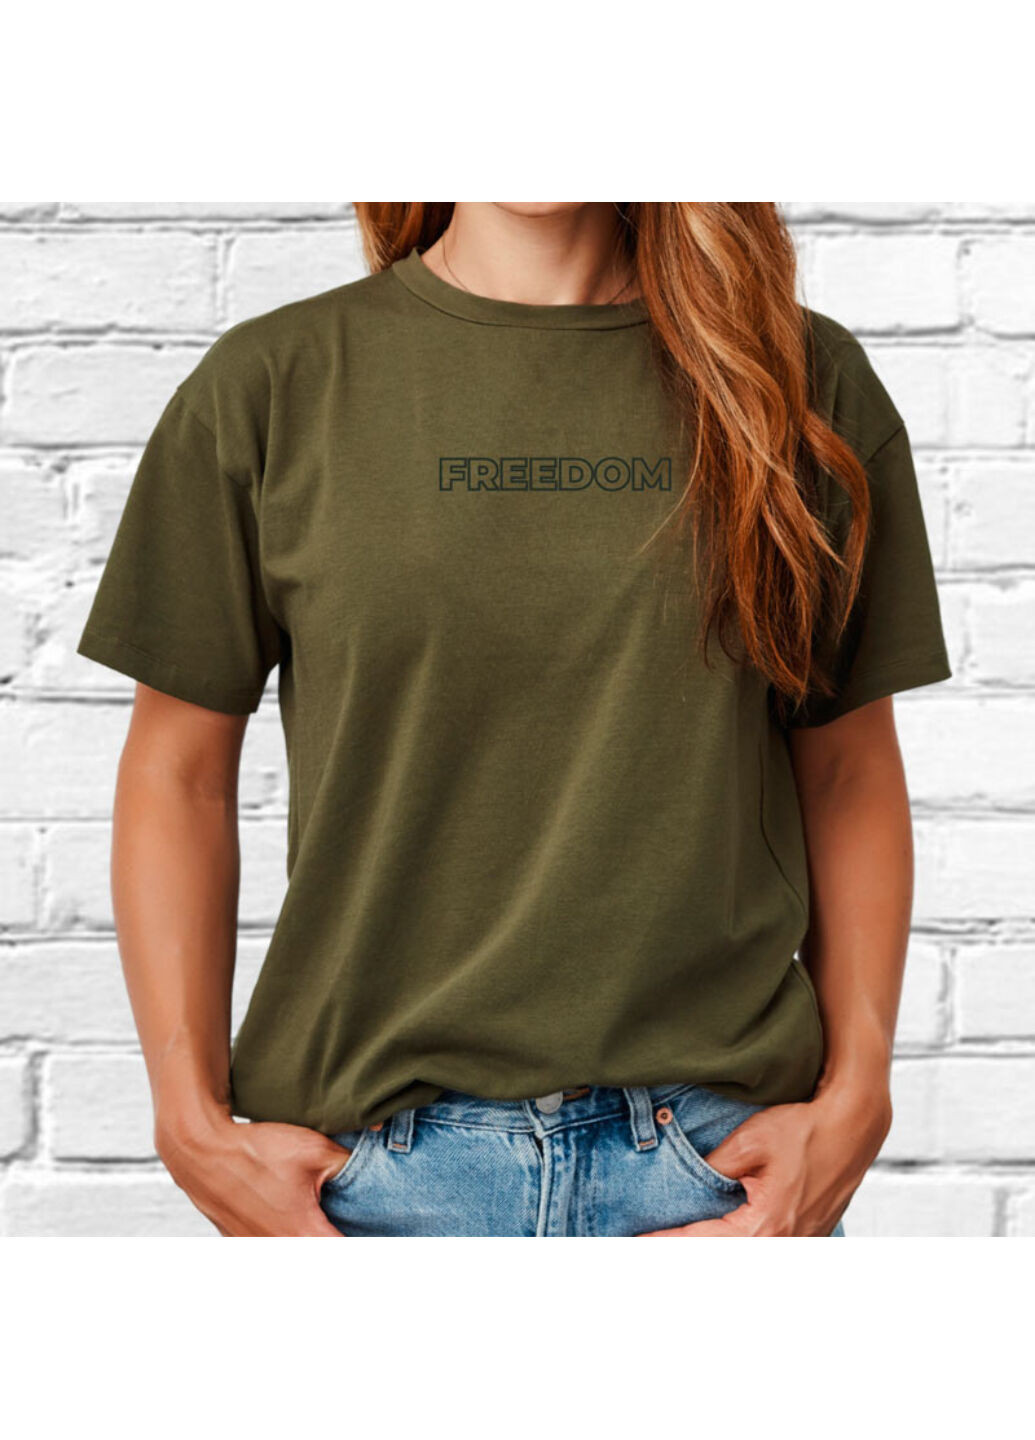 Хаки (оливковая) футболка з вишивкою freedom женская хаки l No Brand